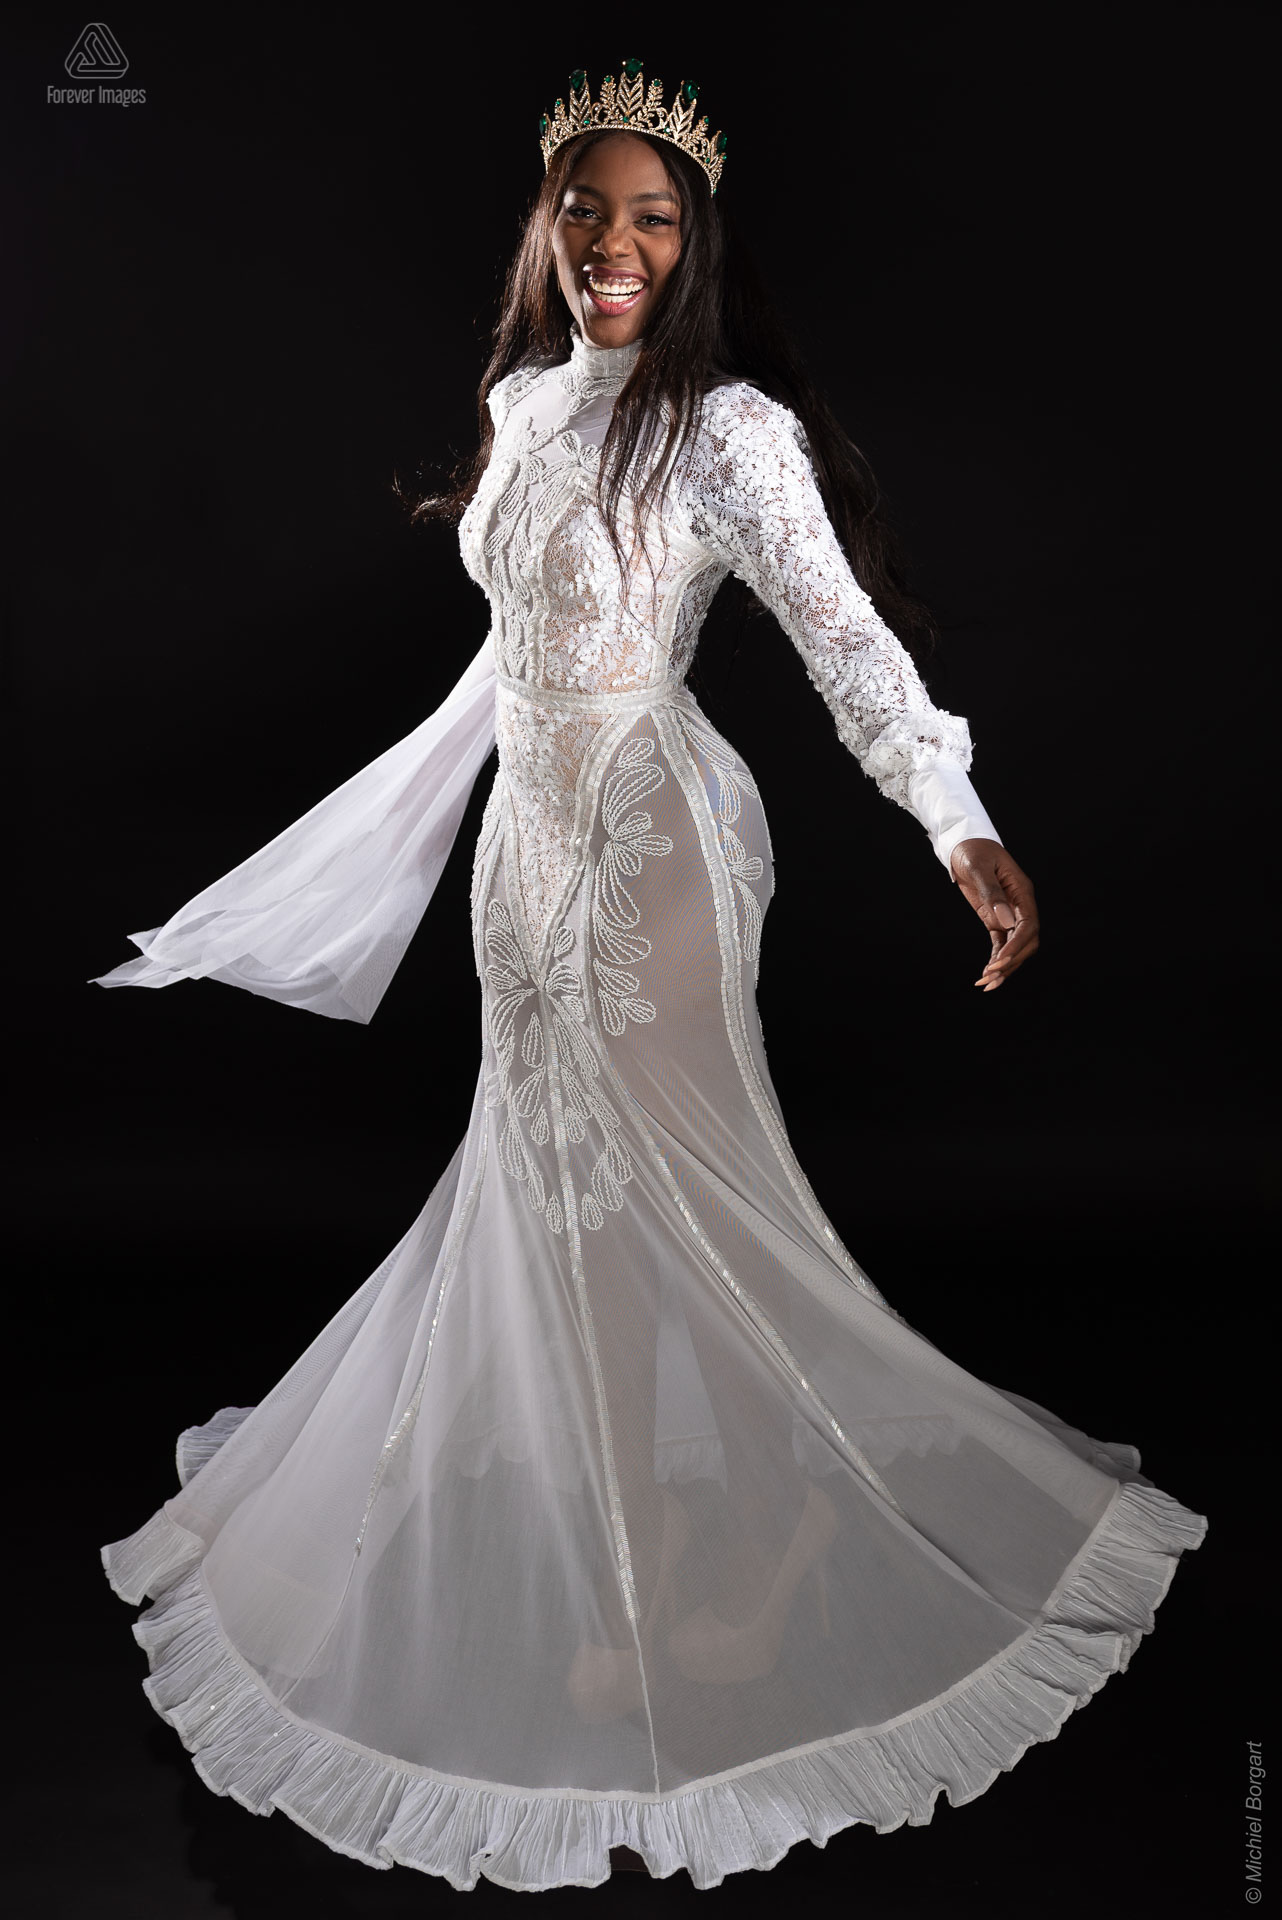 Fashionfoto witte jurk totaal met kroon draaiend | Mariana Pietersz Miss Avantgarde Ronald Rizzo Piu Colore | Fashionfotograaf Michiel Borgart - Forever Images.